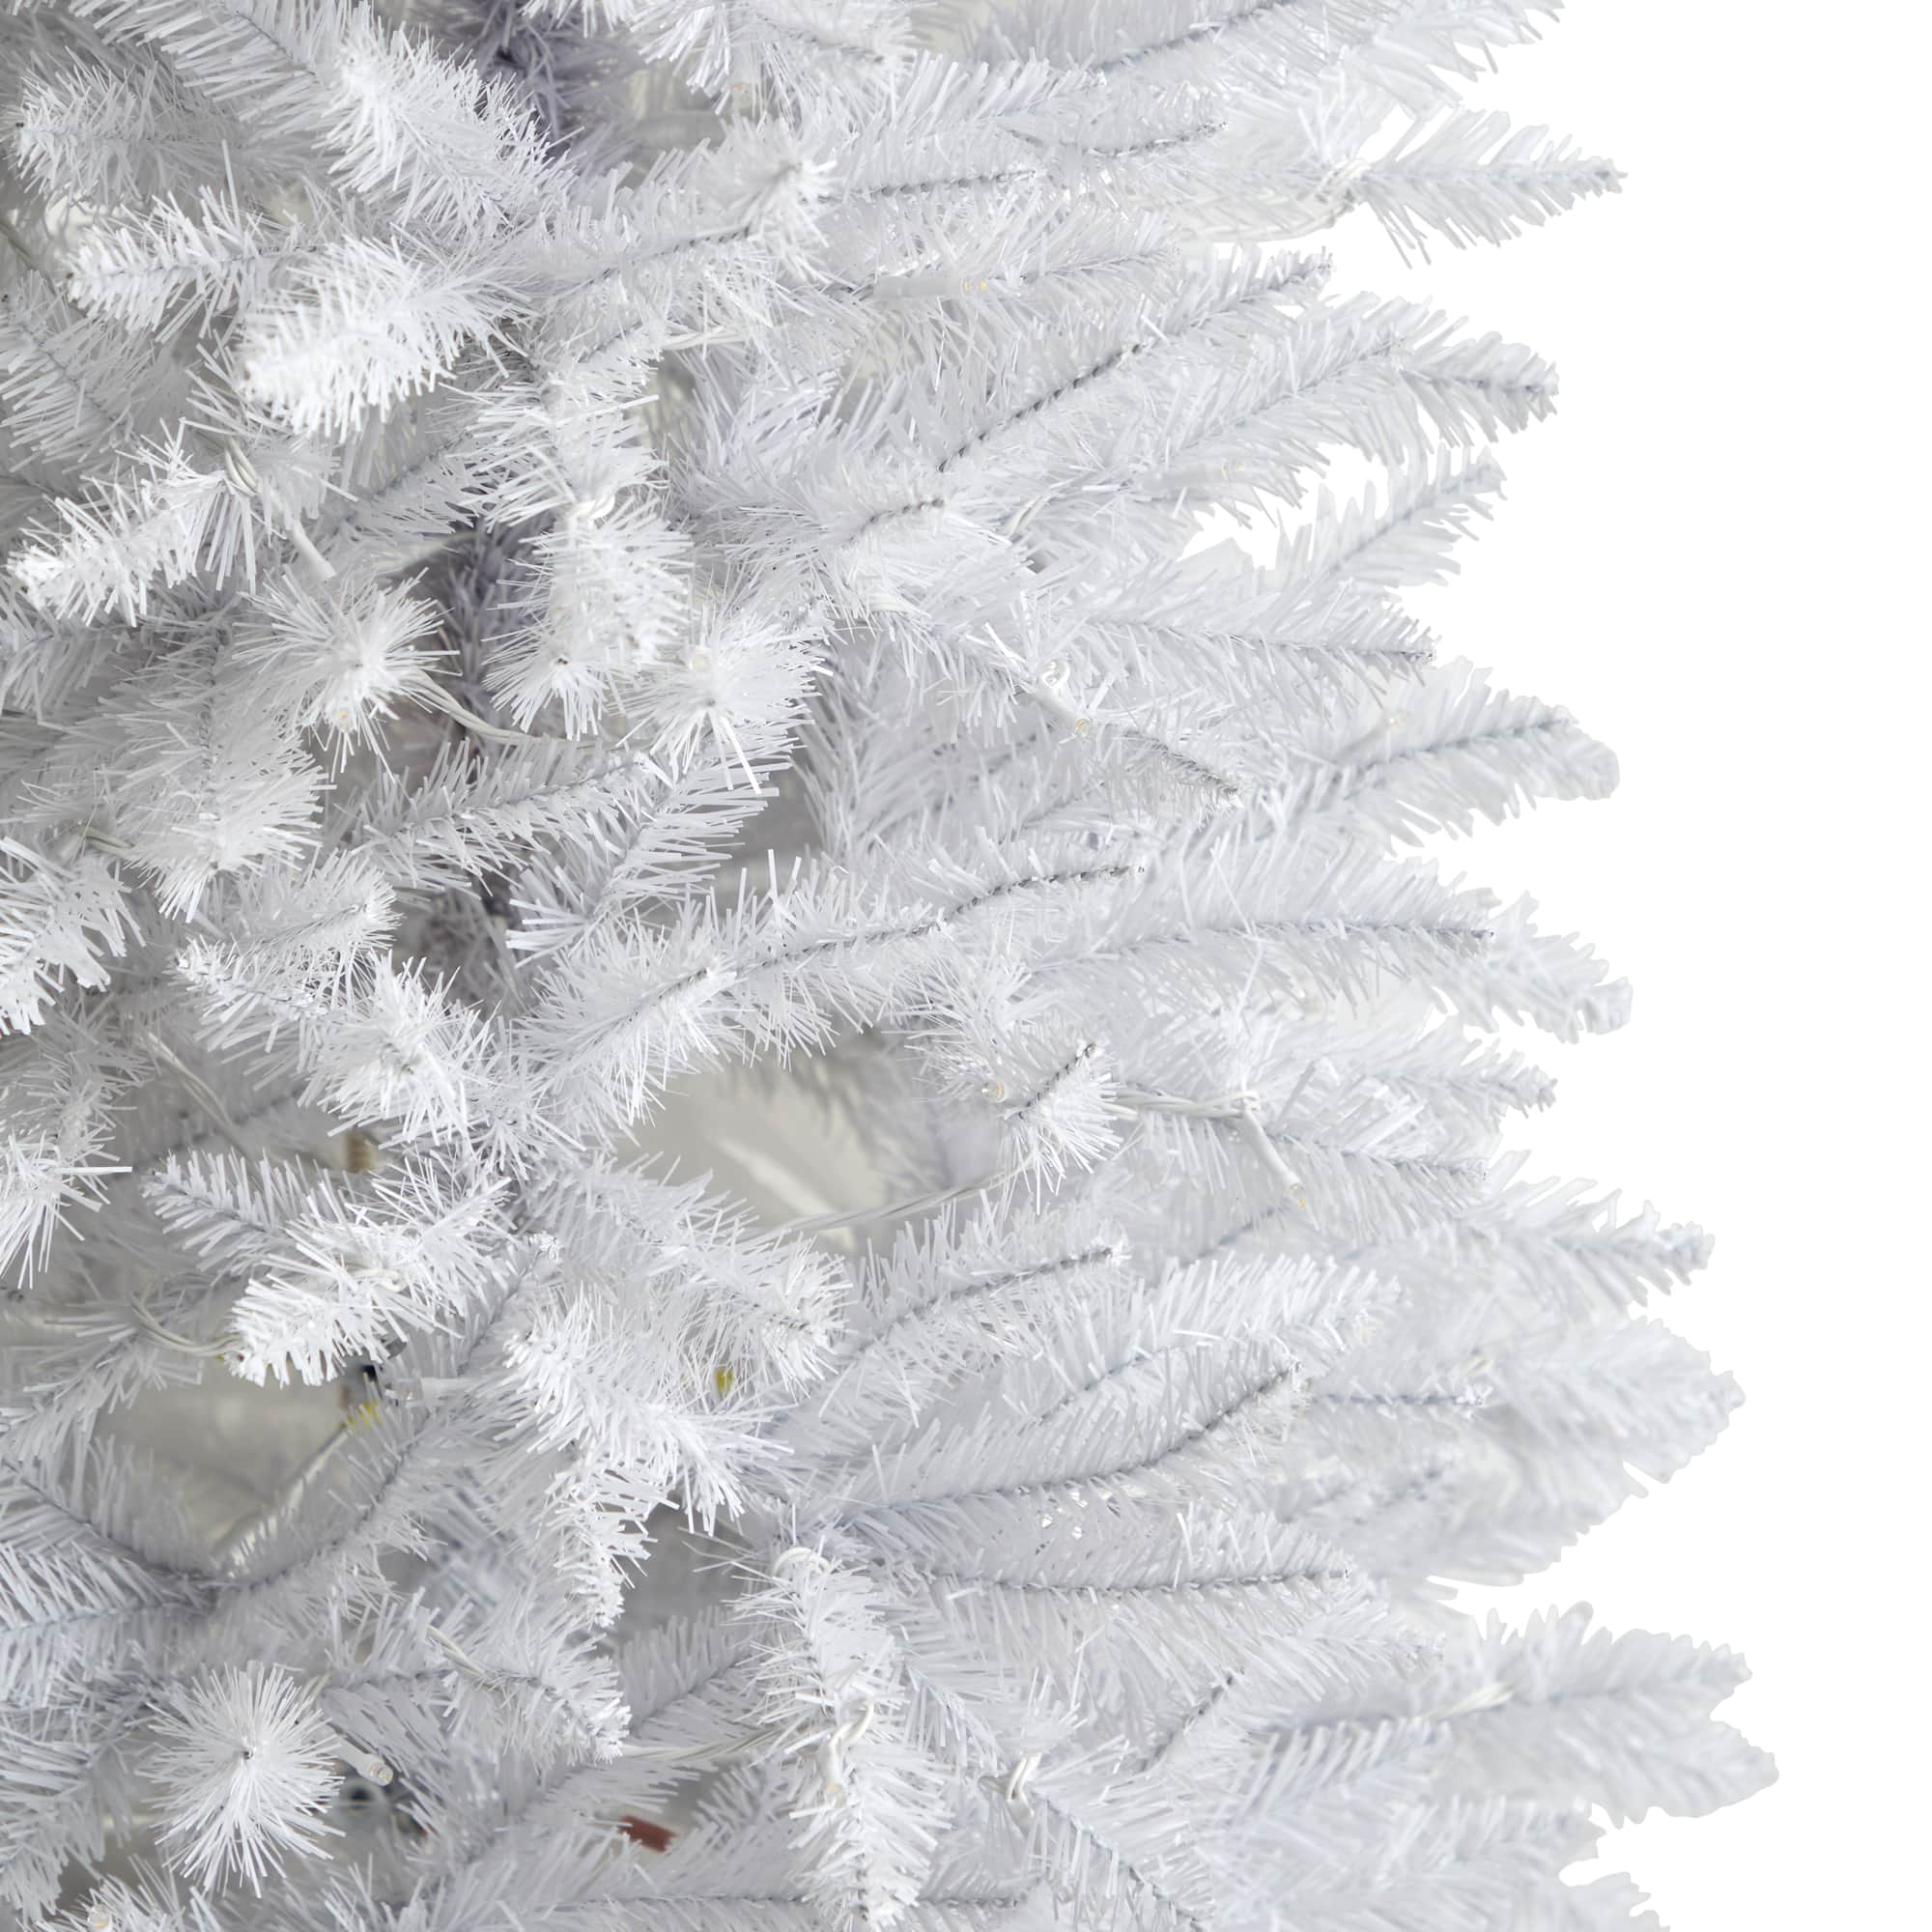 6ft. Pre-Lit White Artificial Christmas Tree, Warm White LED Lights